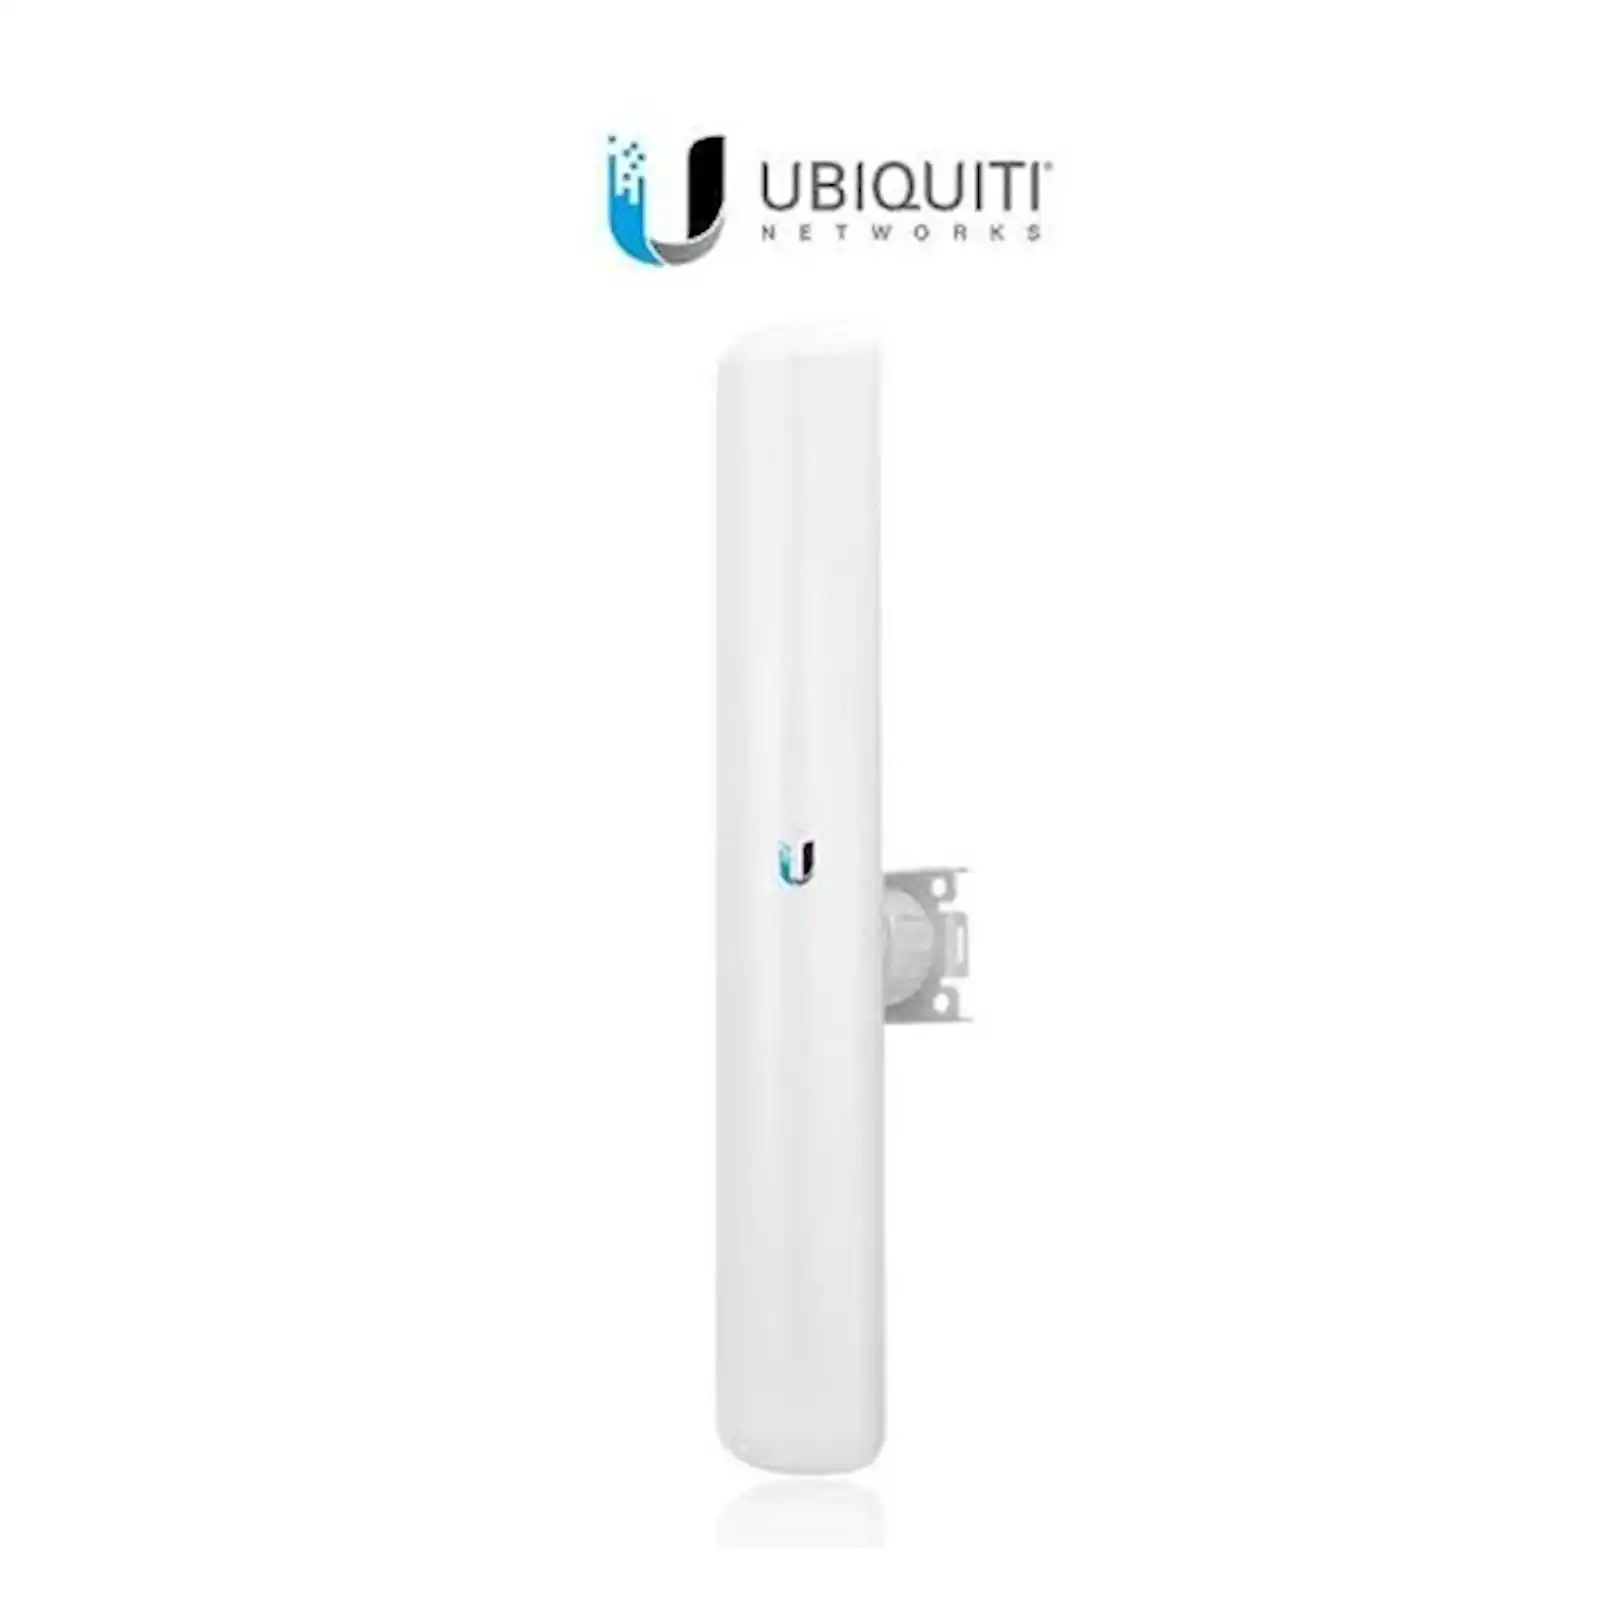 Ubiquiti ( Ubnt ) - LAP-120 5 GHz airMAX AC AP, 16 dBi, 120° (Formerly LBE-5AC-16-120)